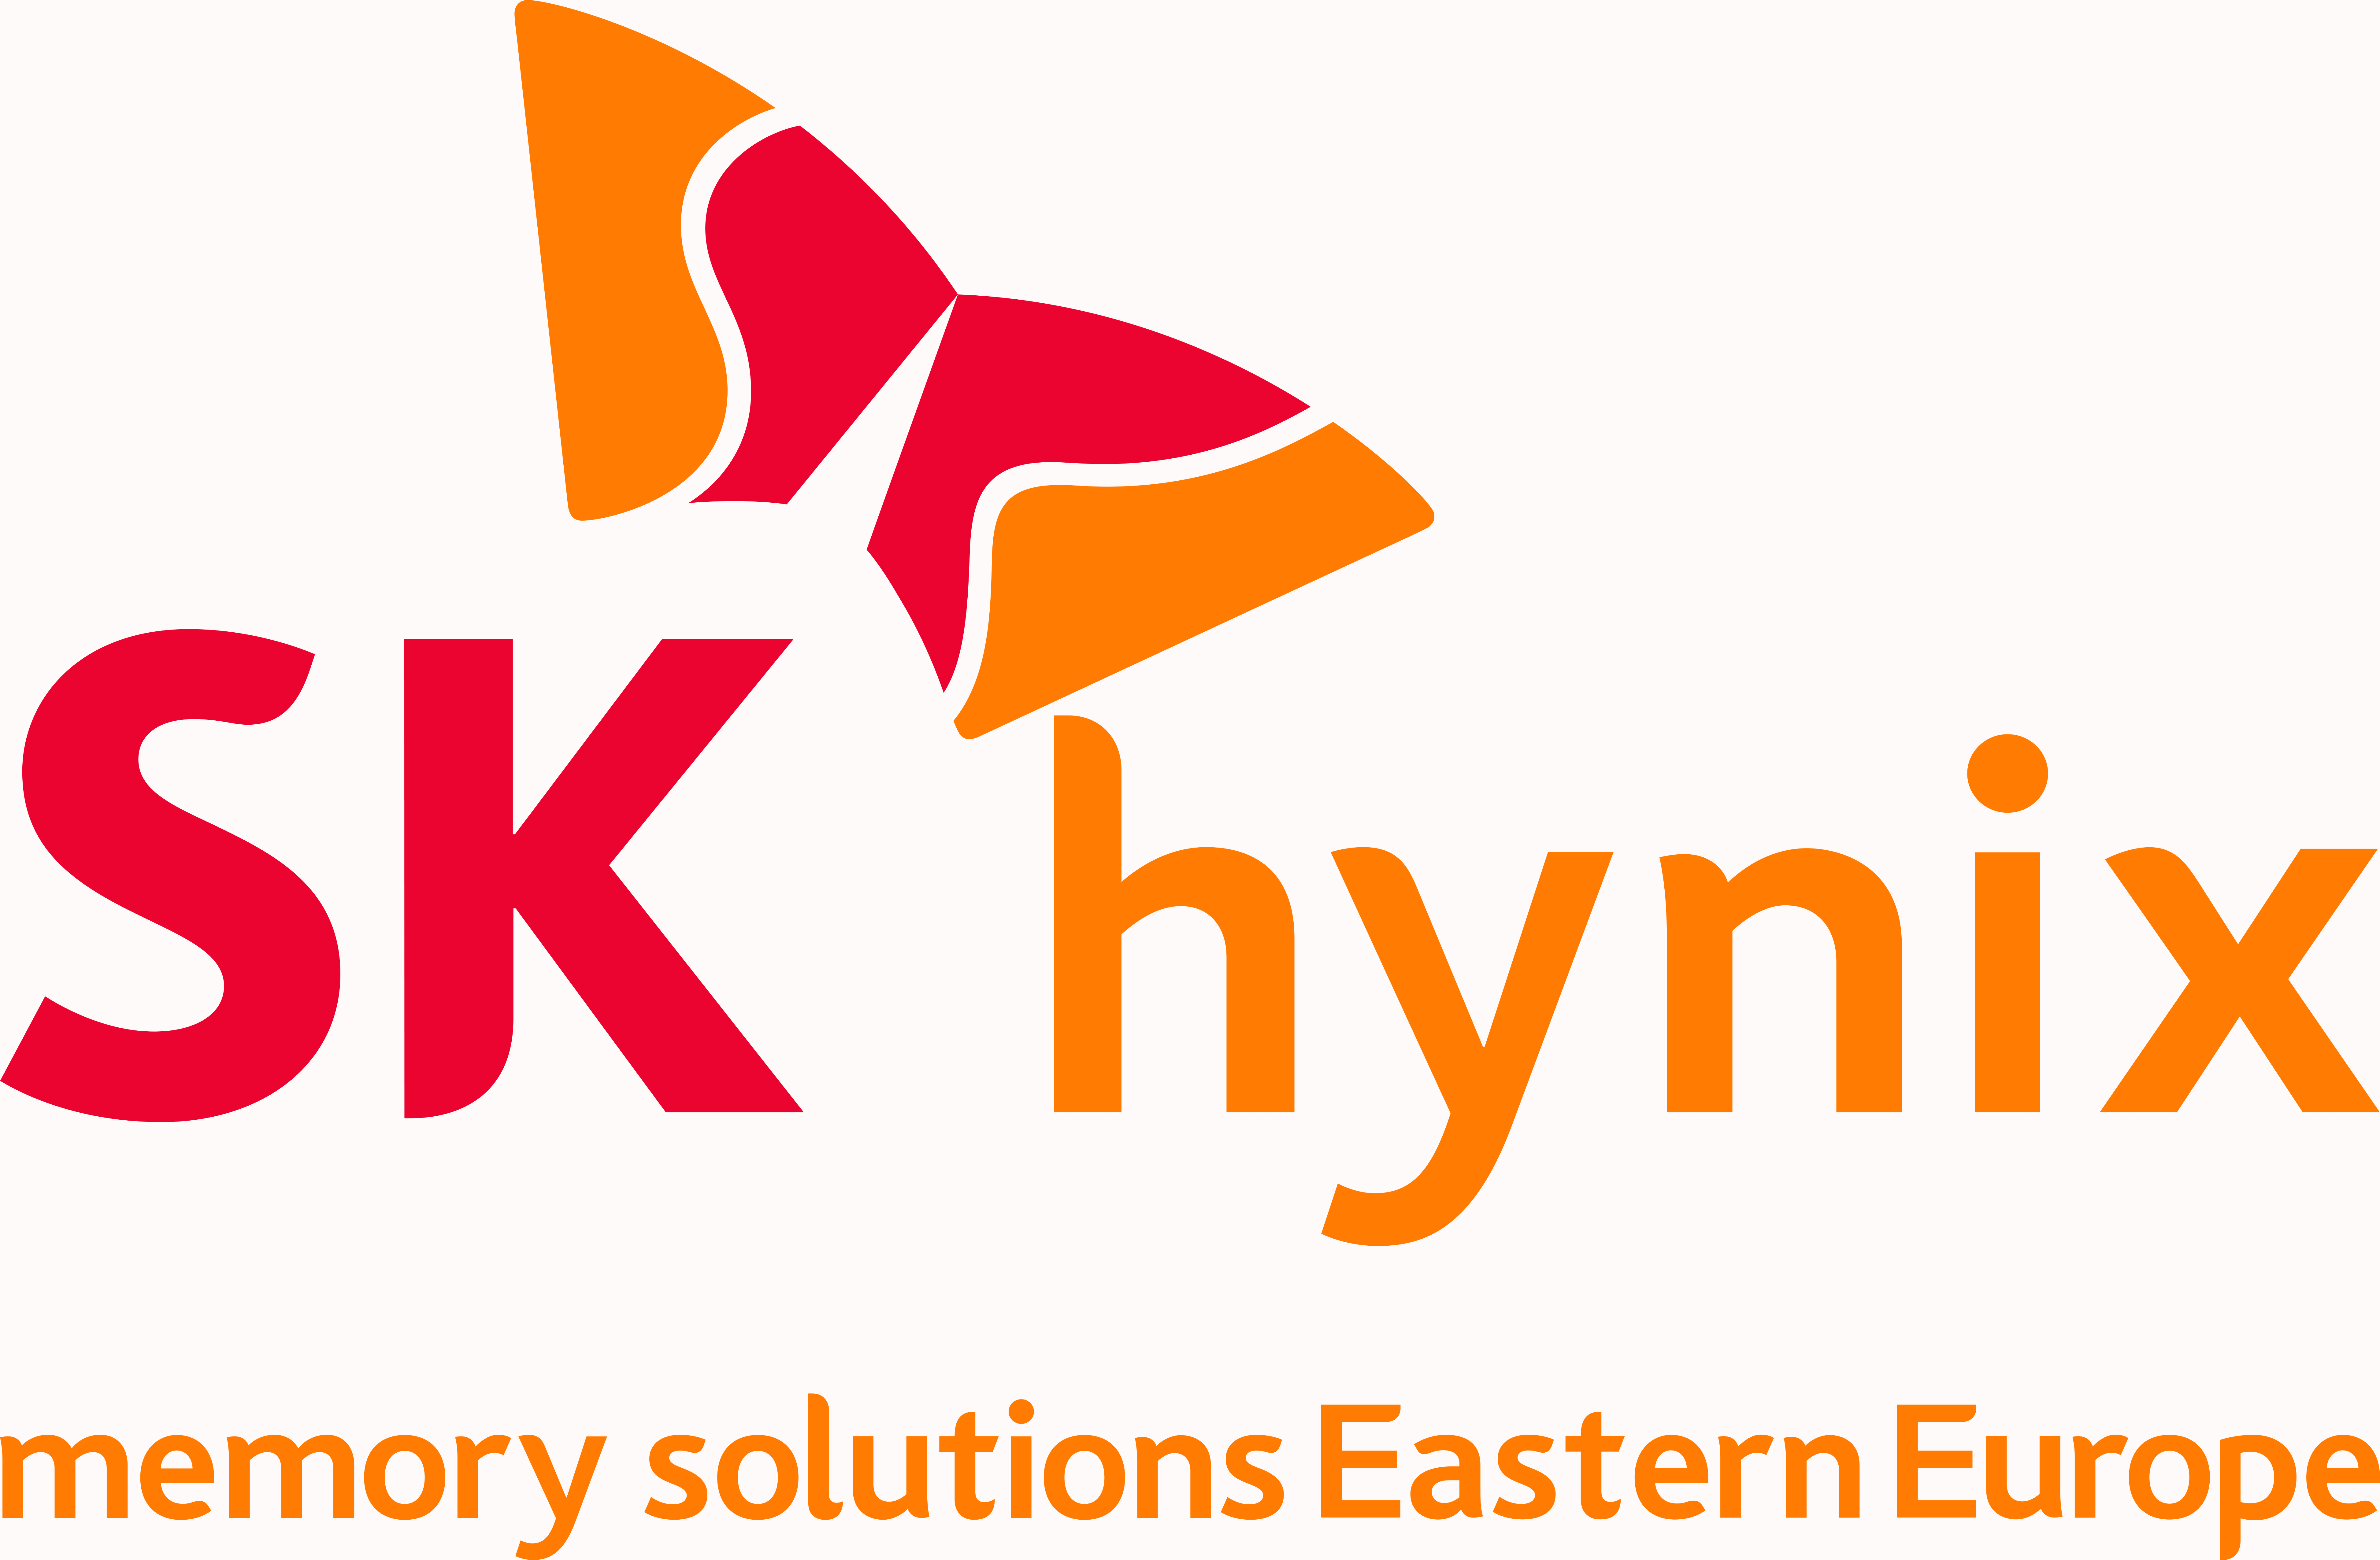 SK hynix memory solutions Eastern Europe